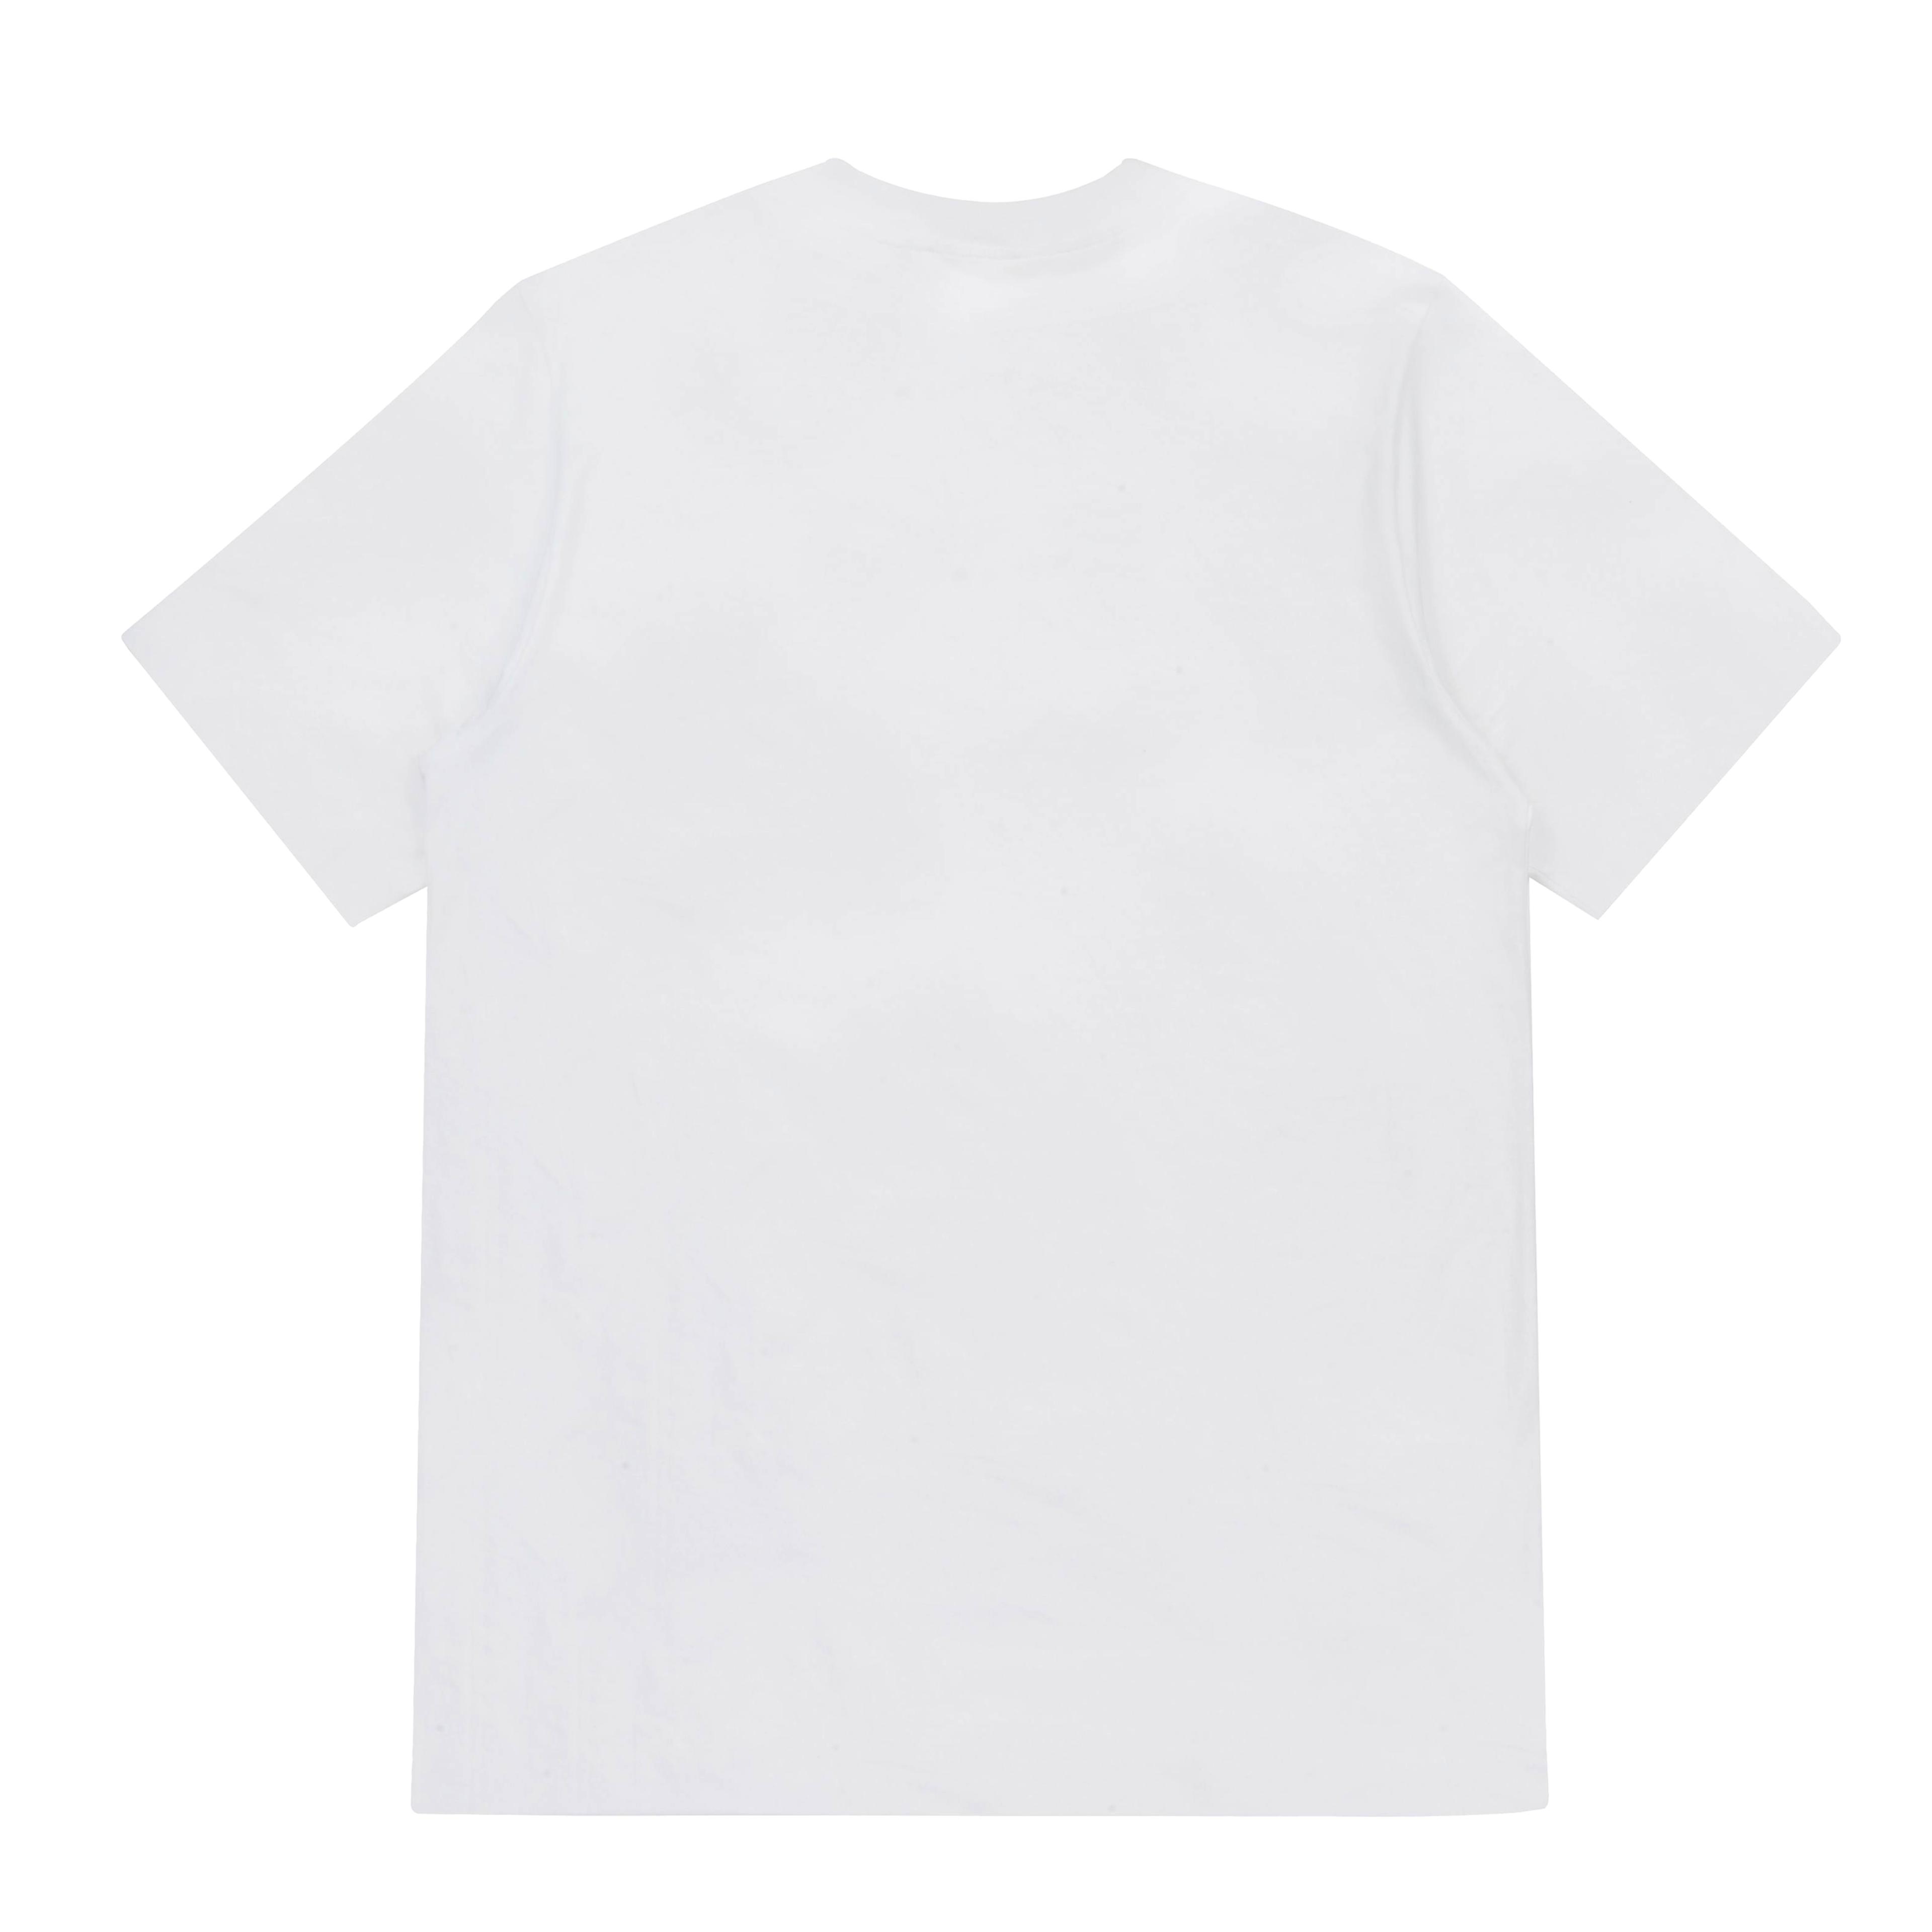 Alternate View 1 of Marni Logo Print Cotton Jersey Tee Lily White